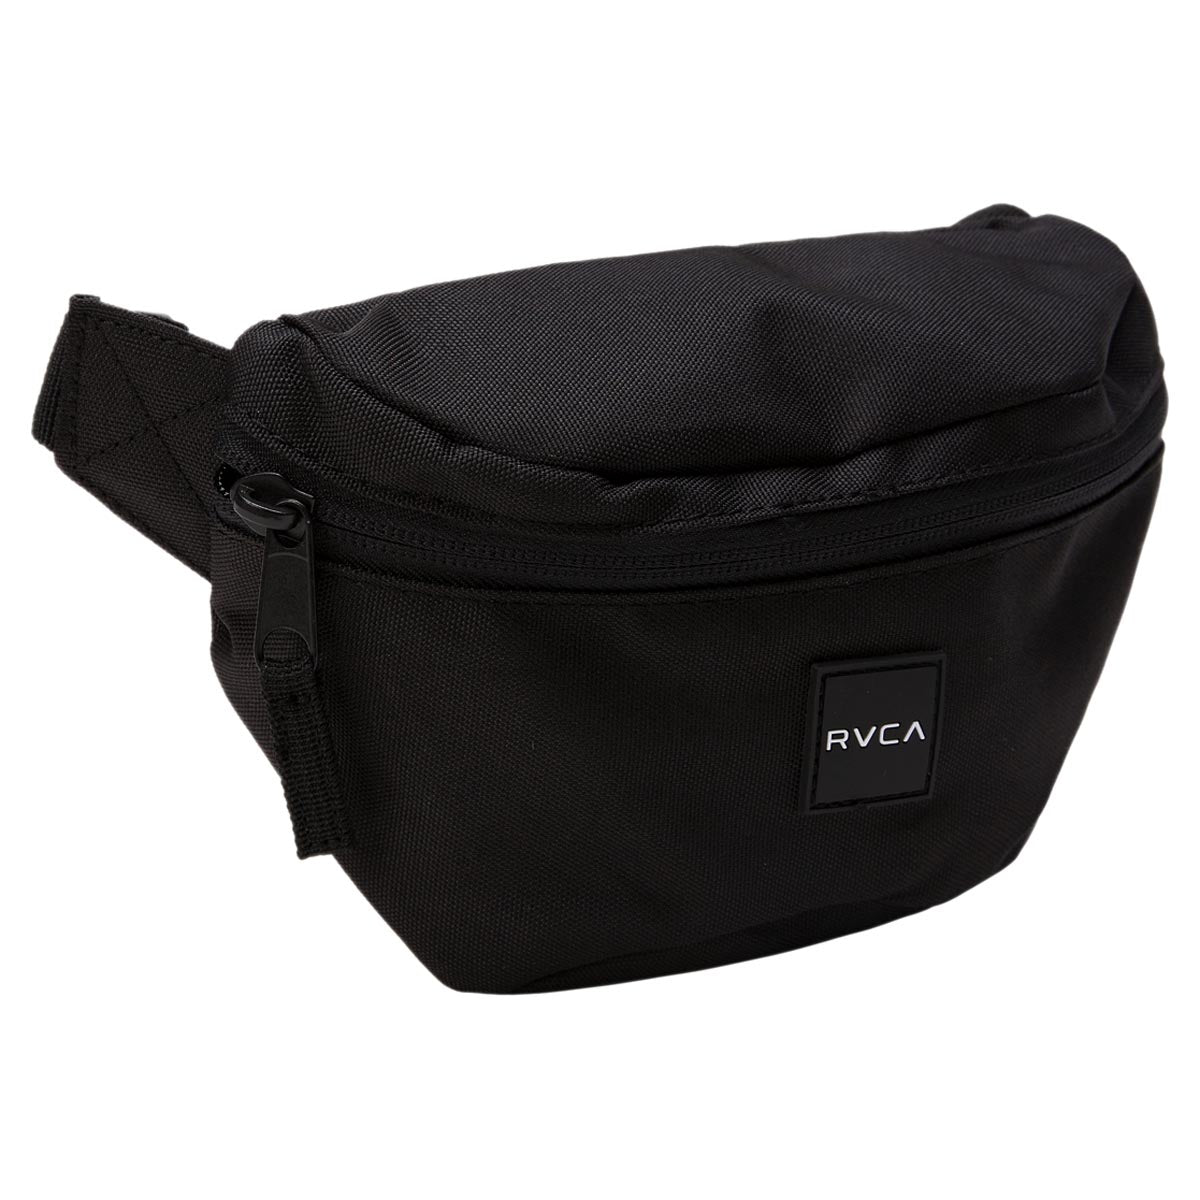 RVCA Waist II Bag - Black image 4